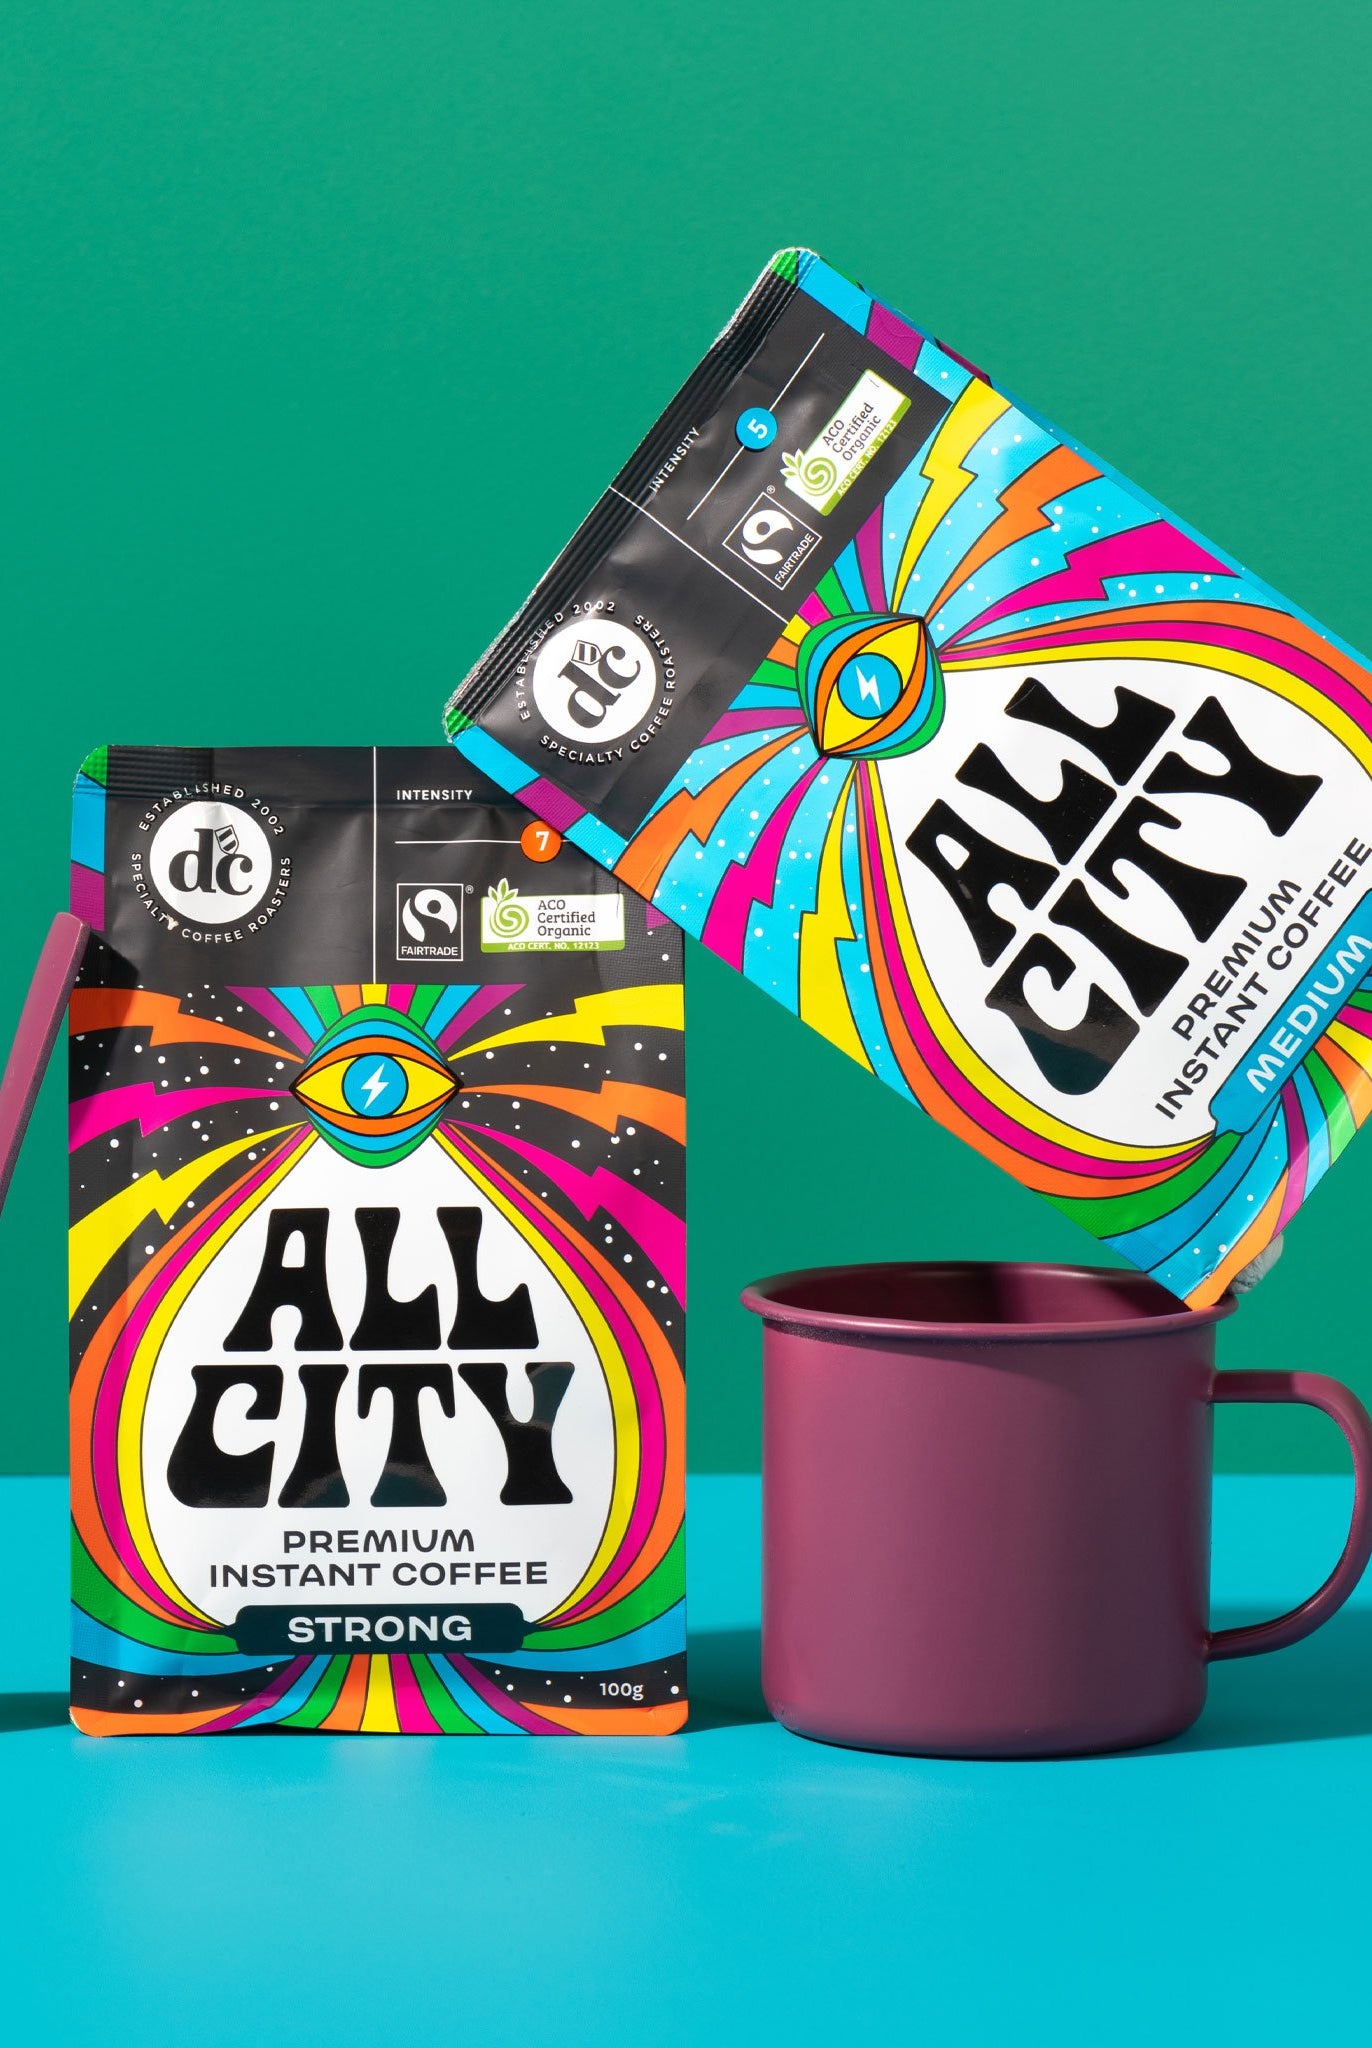 AllCity Premium Instant Strong - DC Specialty Coffee